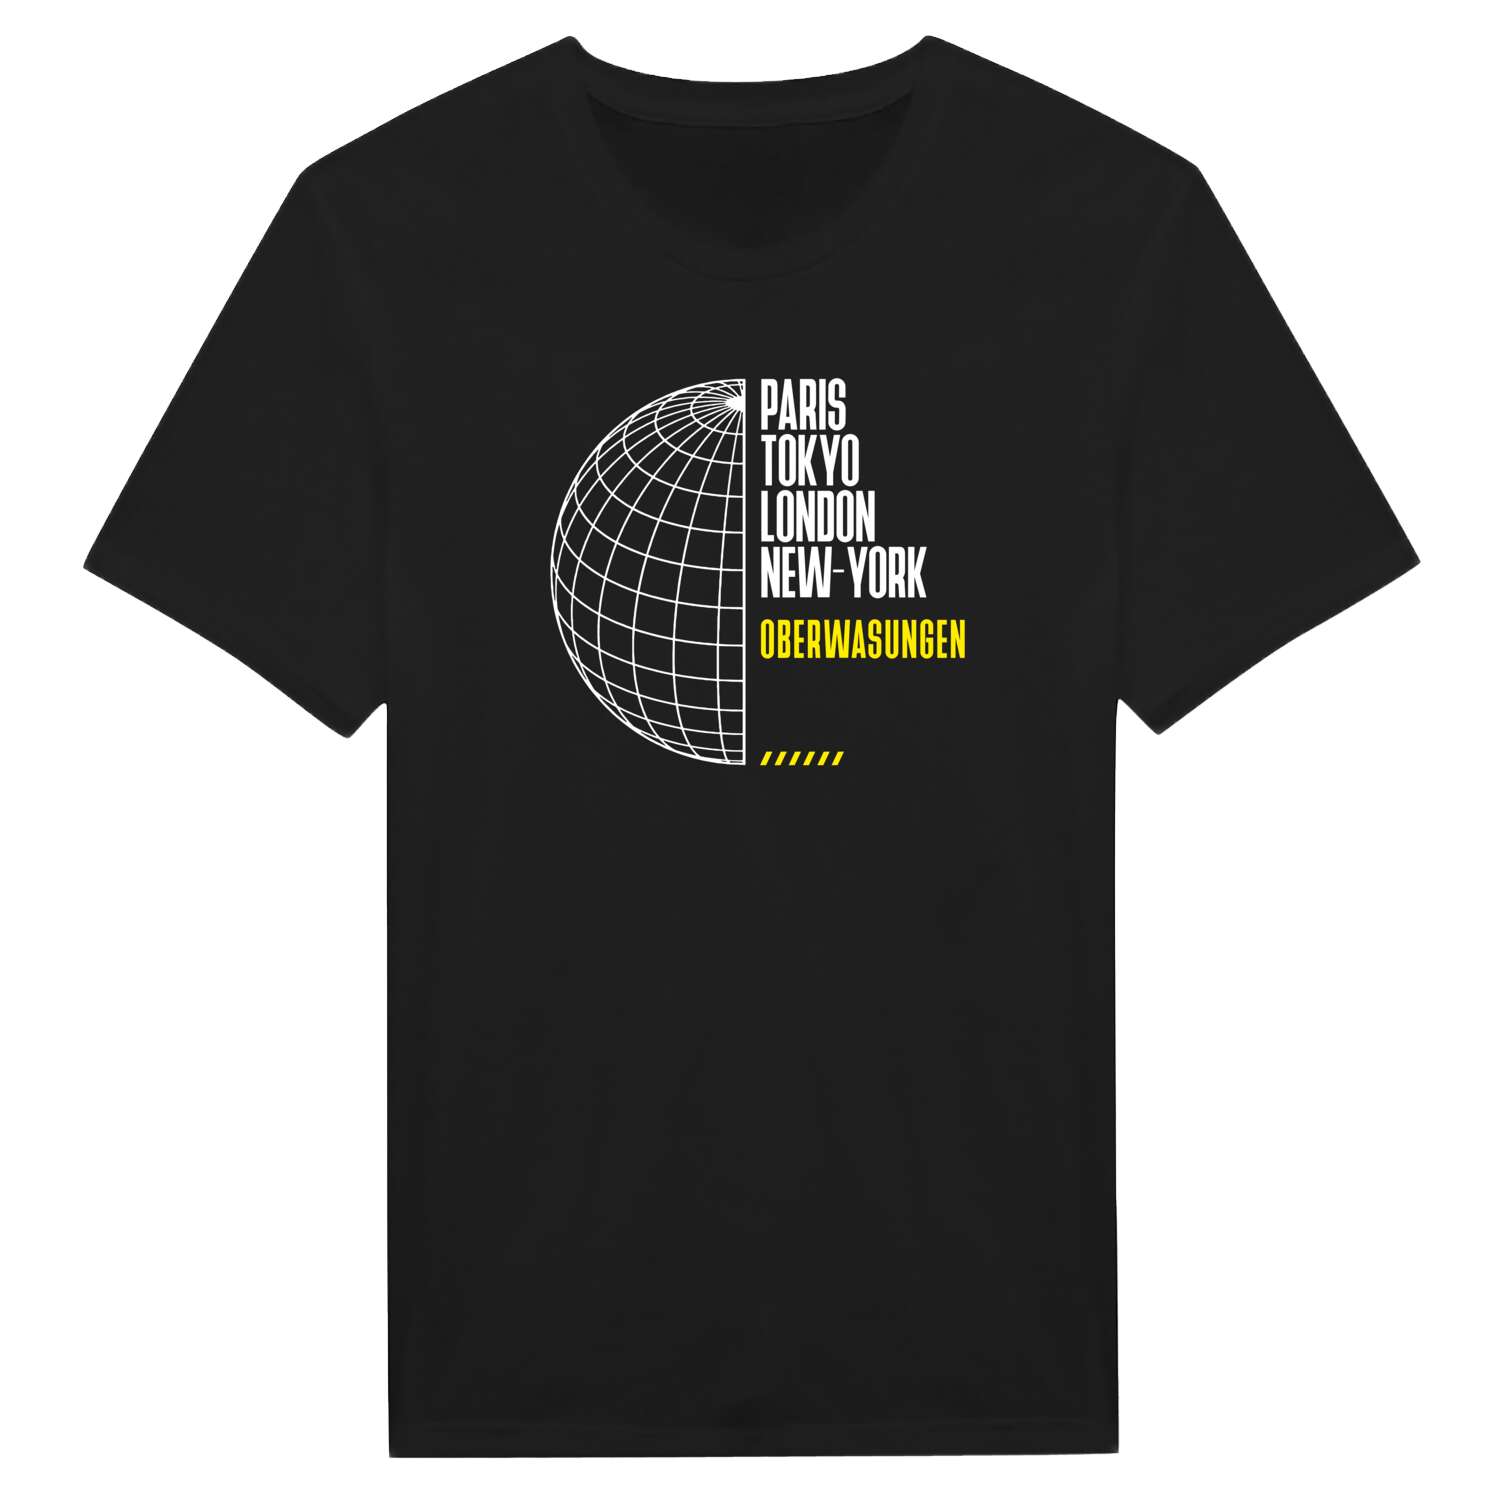 Oberwasungen T-Shirt »Paris Tokyo London«